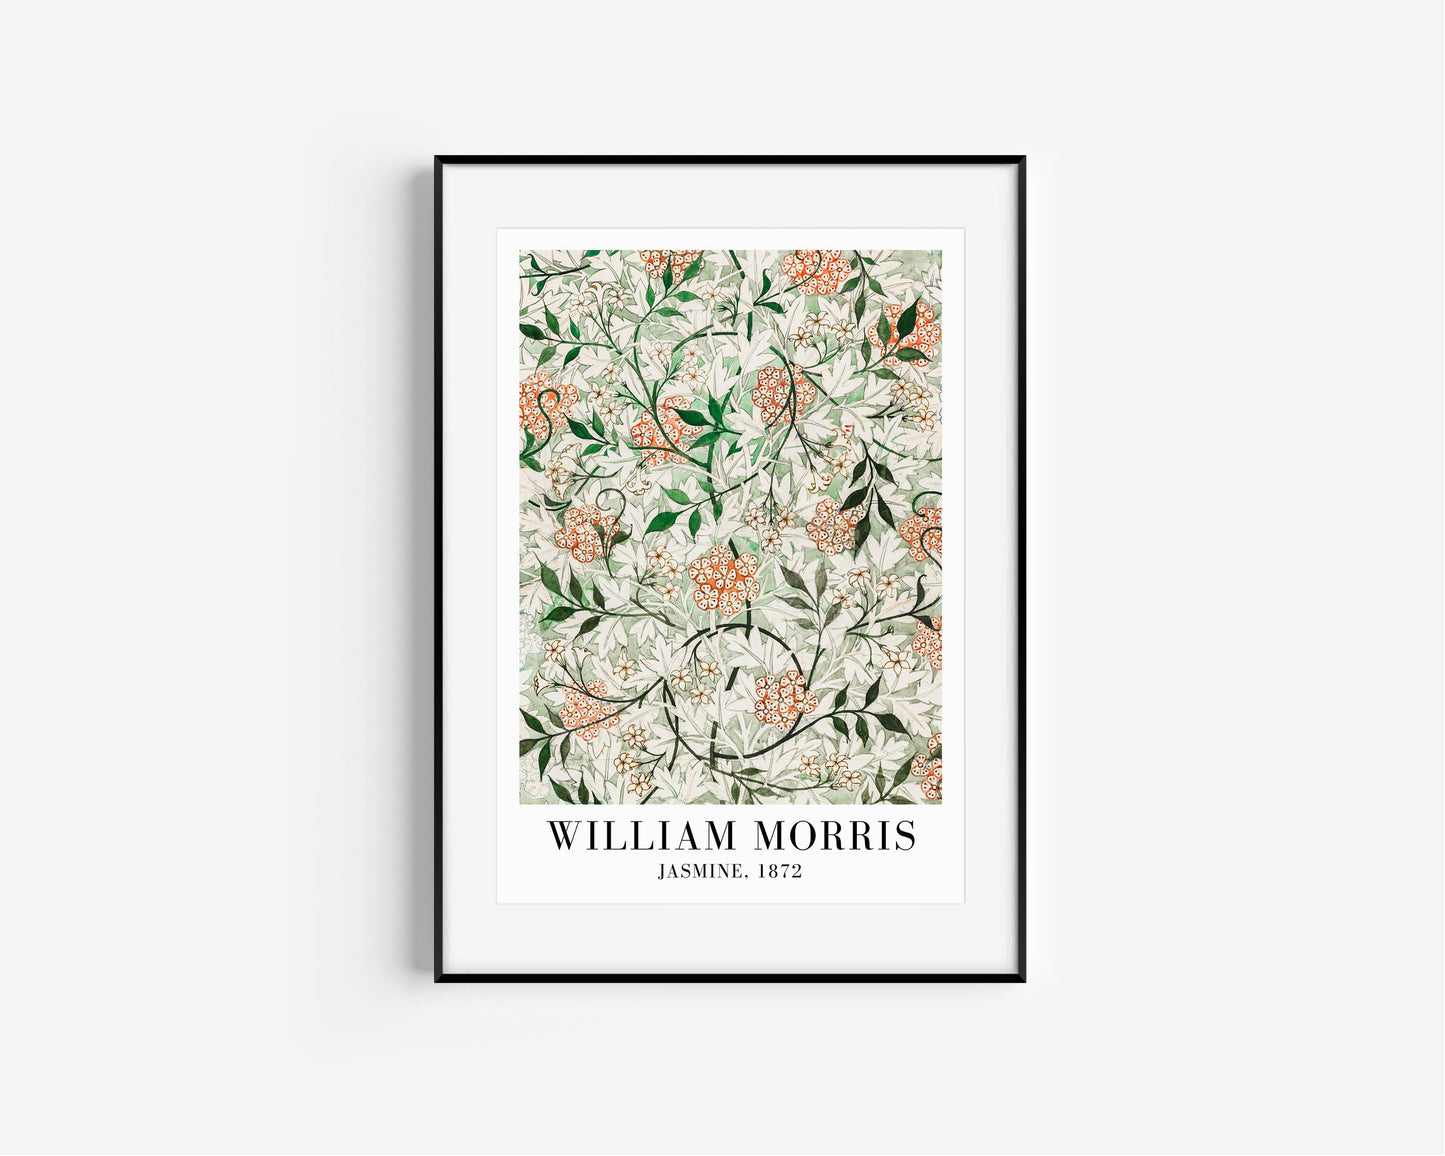 William Morris Art Print, Botanical print, William Morris Jasmine 1872, Printed Wall Art, Vintage Poster, Wall Décor, Home Décor, Jasmine,